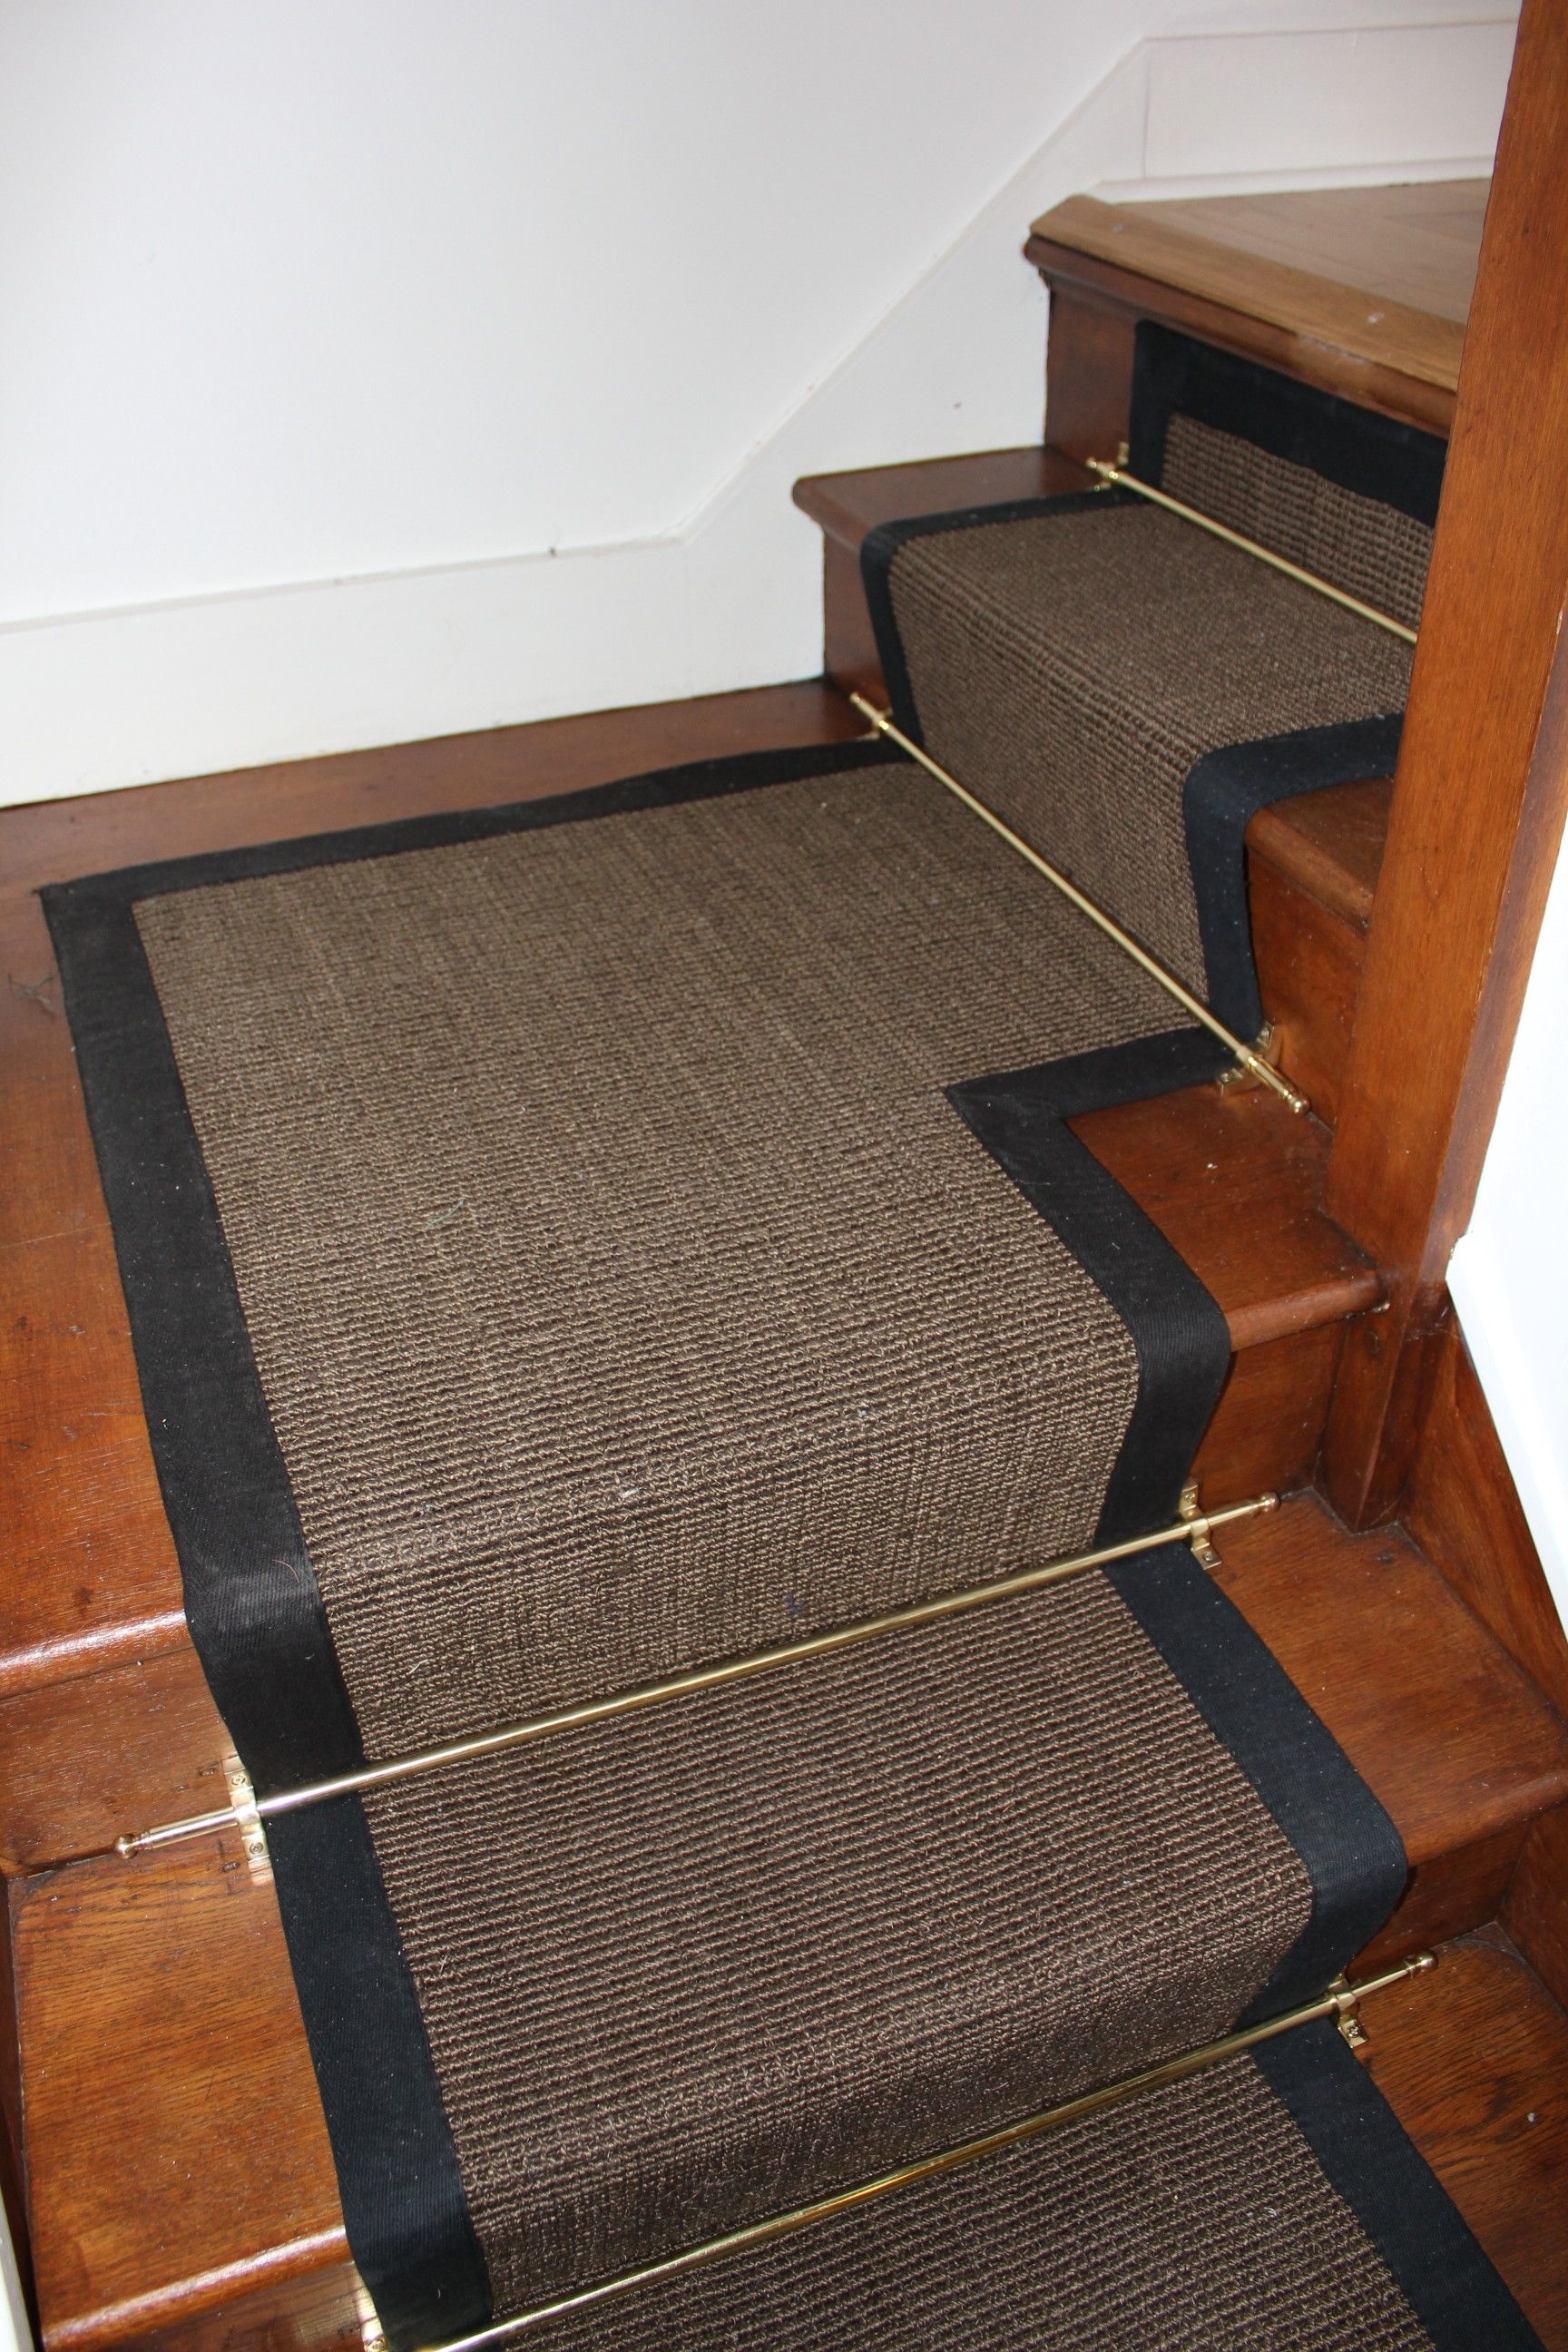 Plastic Carpet Runners For Stairs Carpet Awsa Regarding Stair Tread Carpet Runners (View 13 of 15)